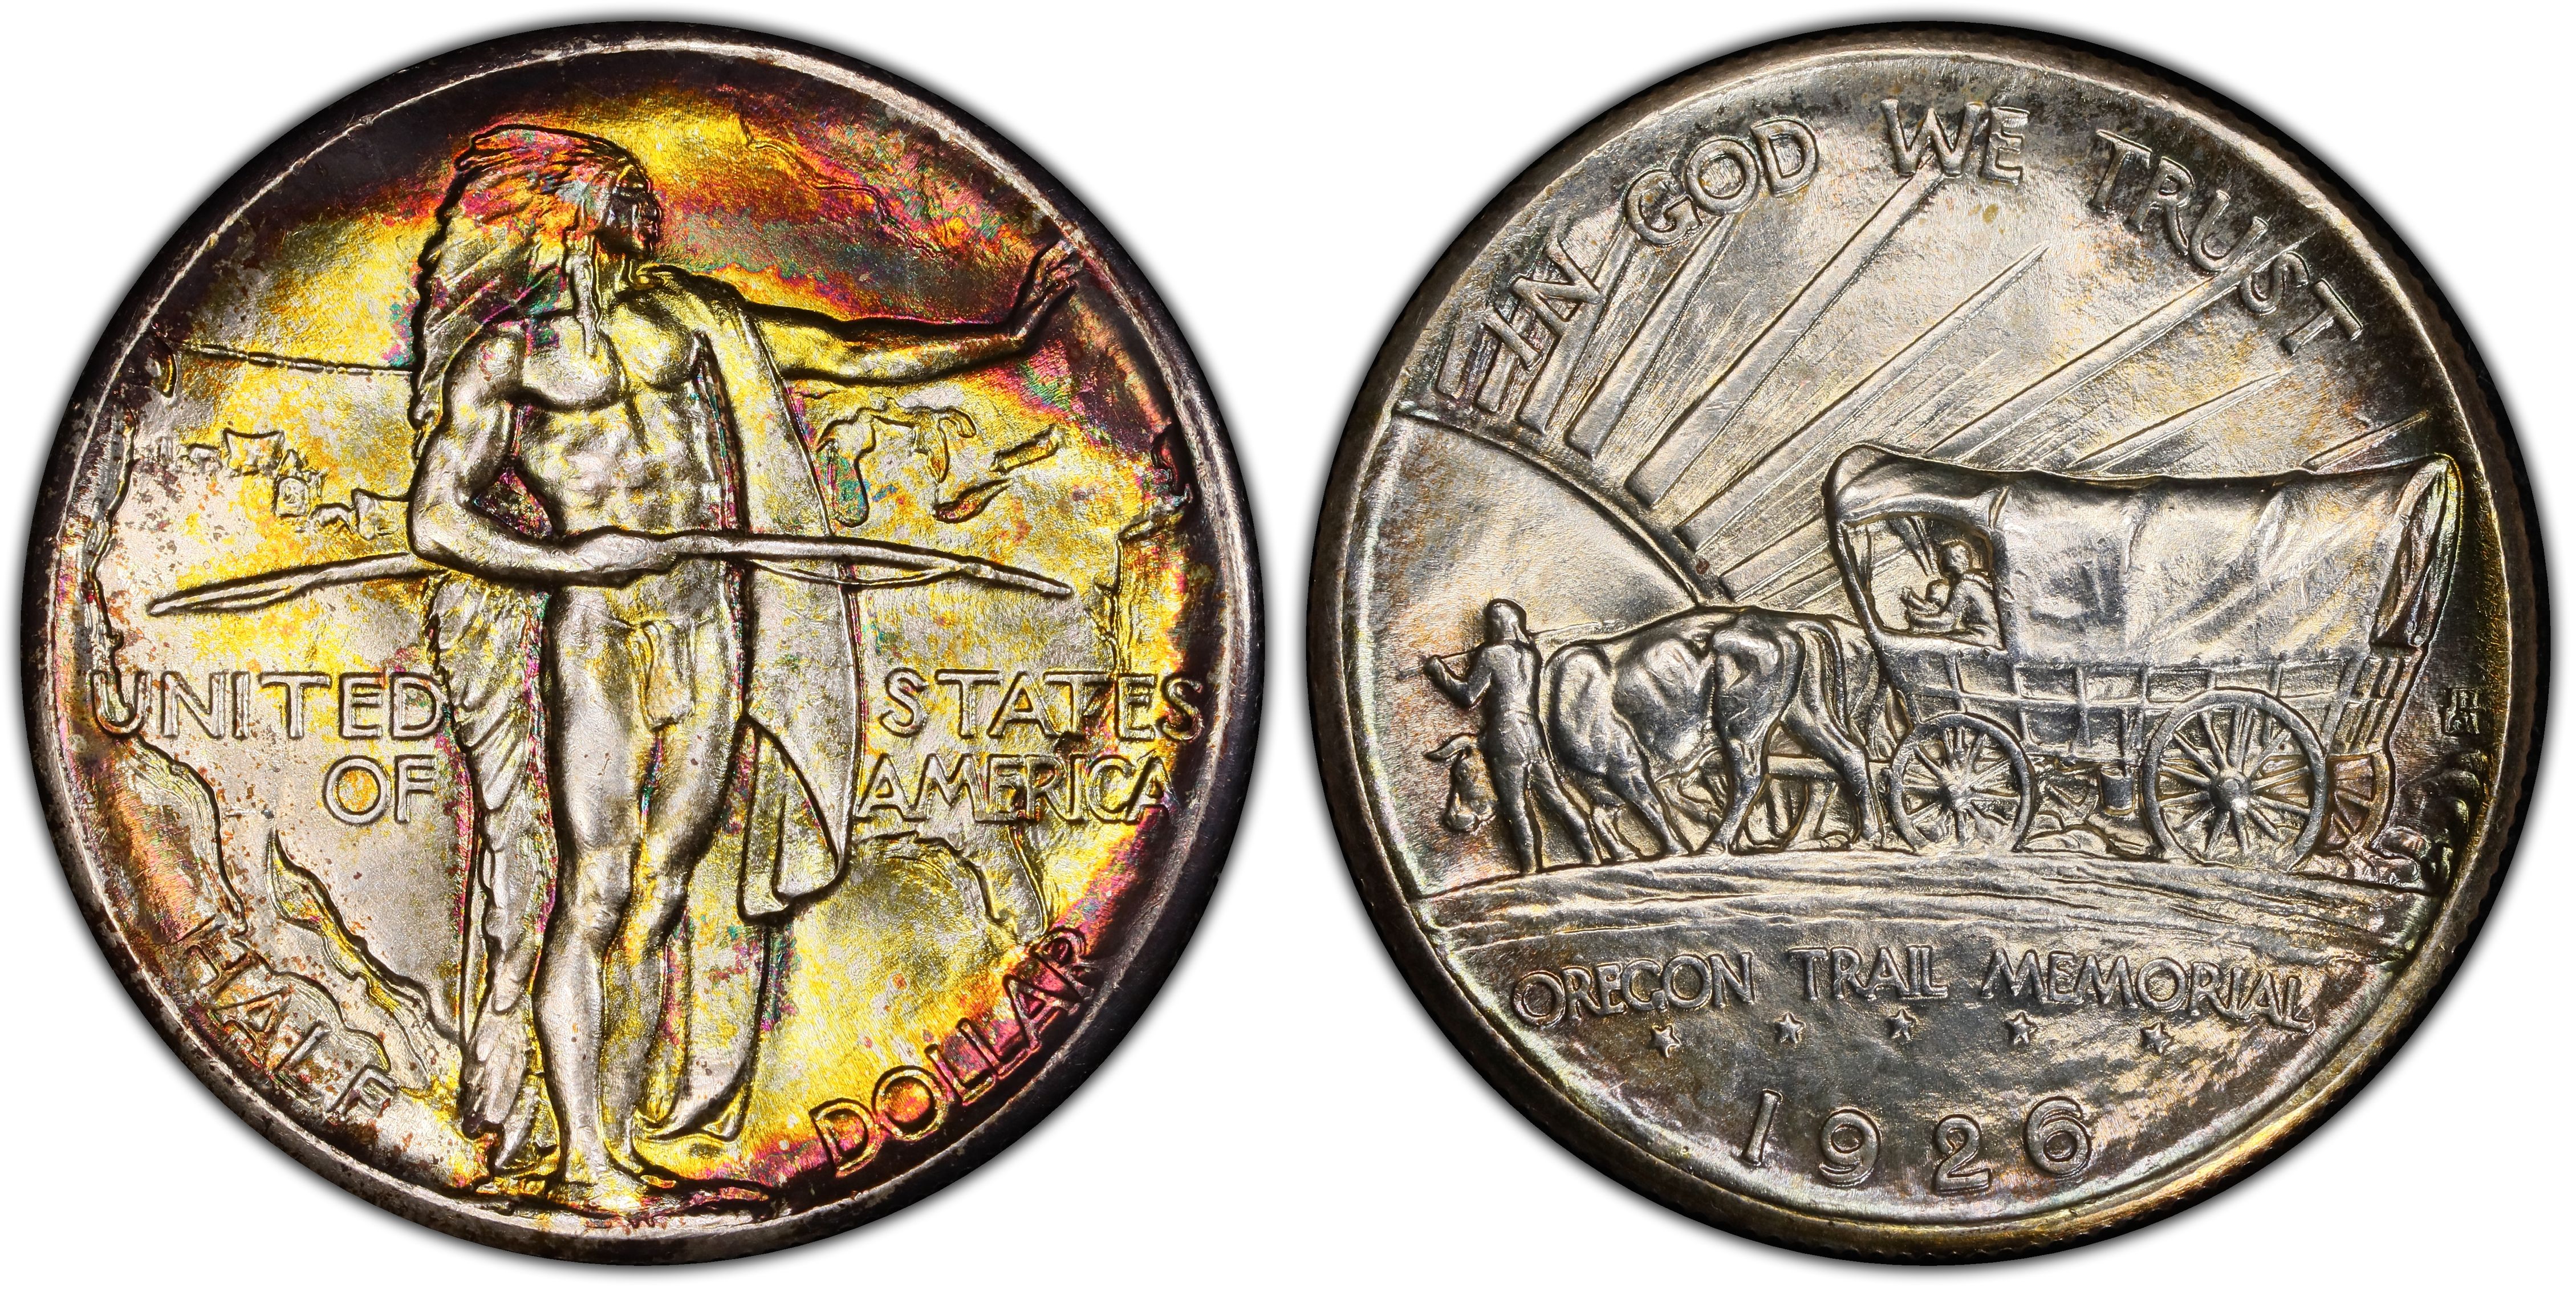 1926 50C Oregon (Regular Strike) Silver Commemorative - PCGS CoinFacts